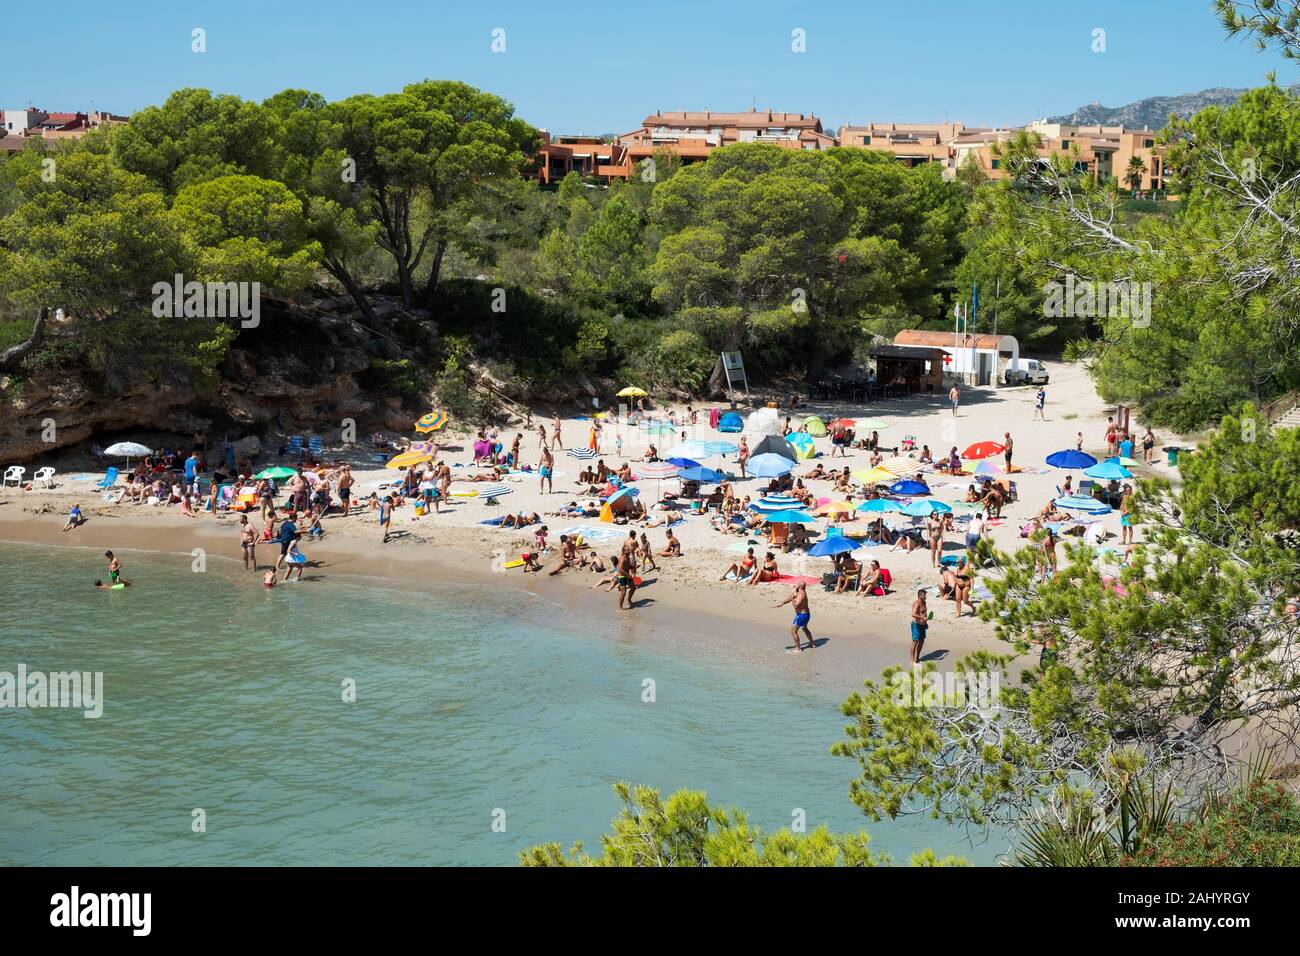 AMETLLA DE MAR, SPAIN - AUGUST 26, 2018: Vacationers at the Cala Calafato beach in Ametlla de Mar, Spain, in the popular Costa Daurada coast Stock Photo